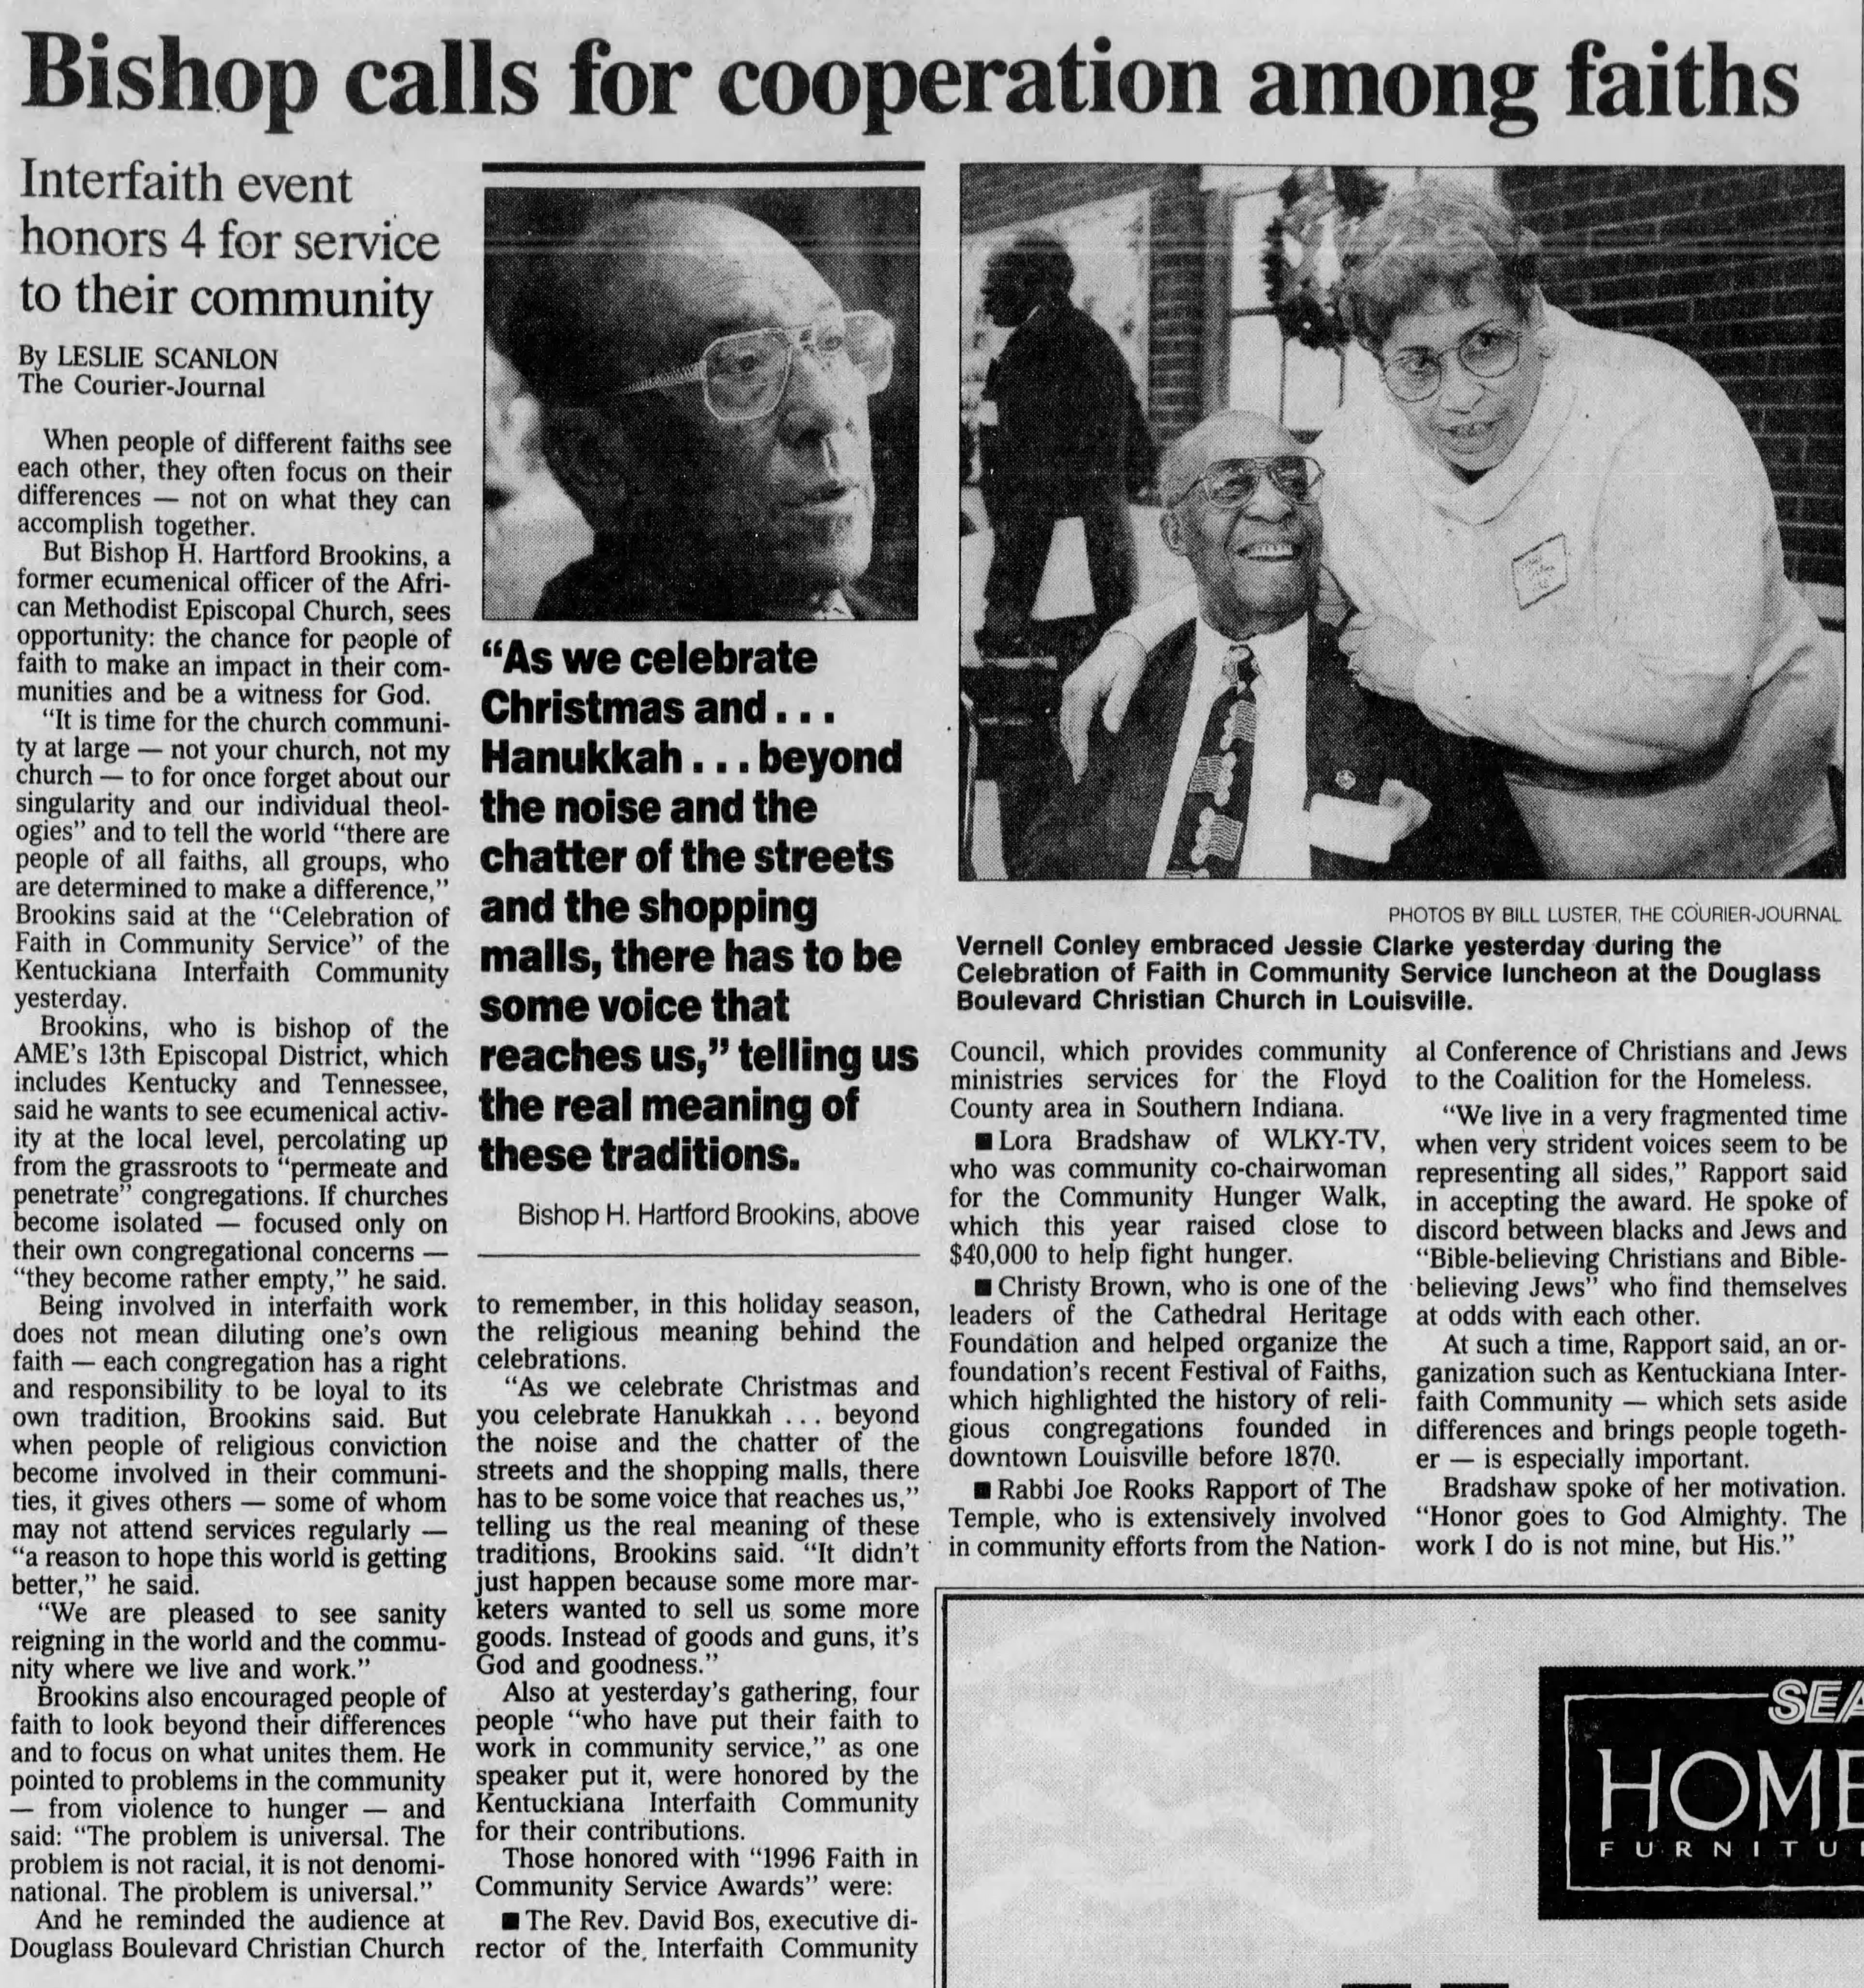 Scanlon, Leslie. “Bishop Calls for Cooperation among Faiths.” The Courier-Journal, 6 Dec. 1996, p. 18.